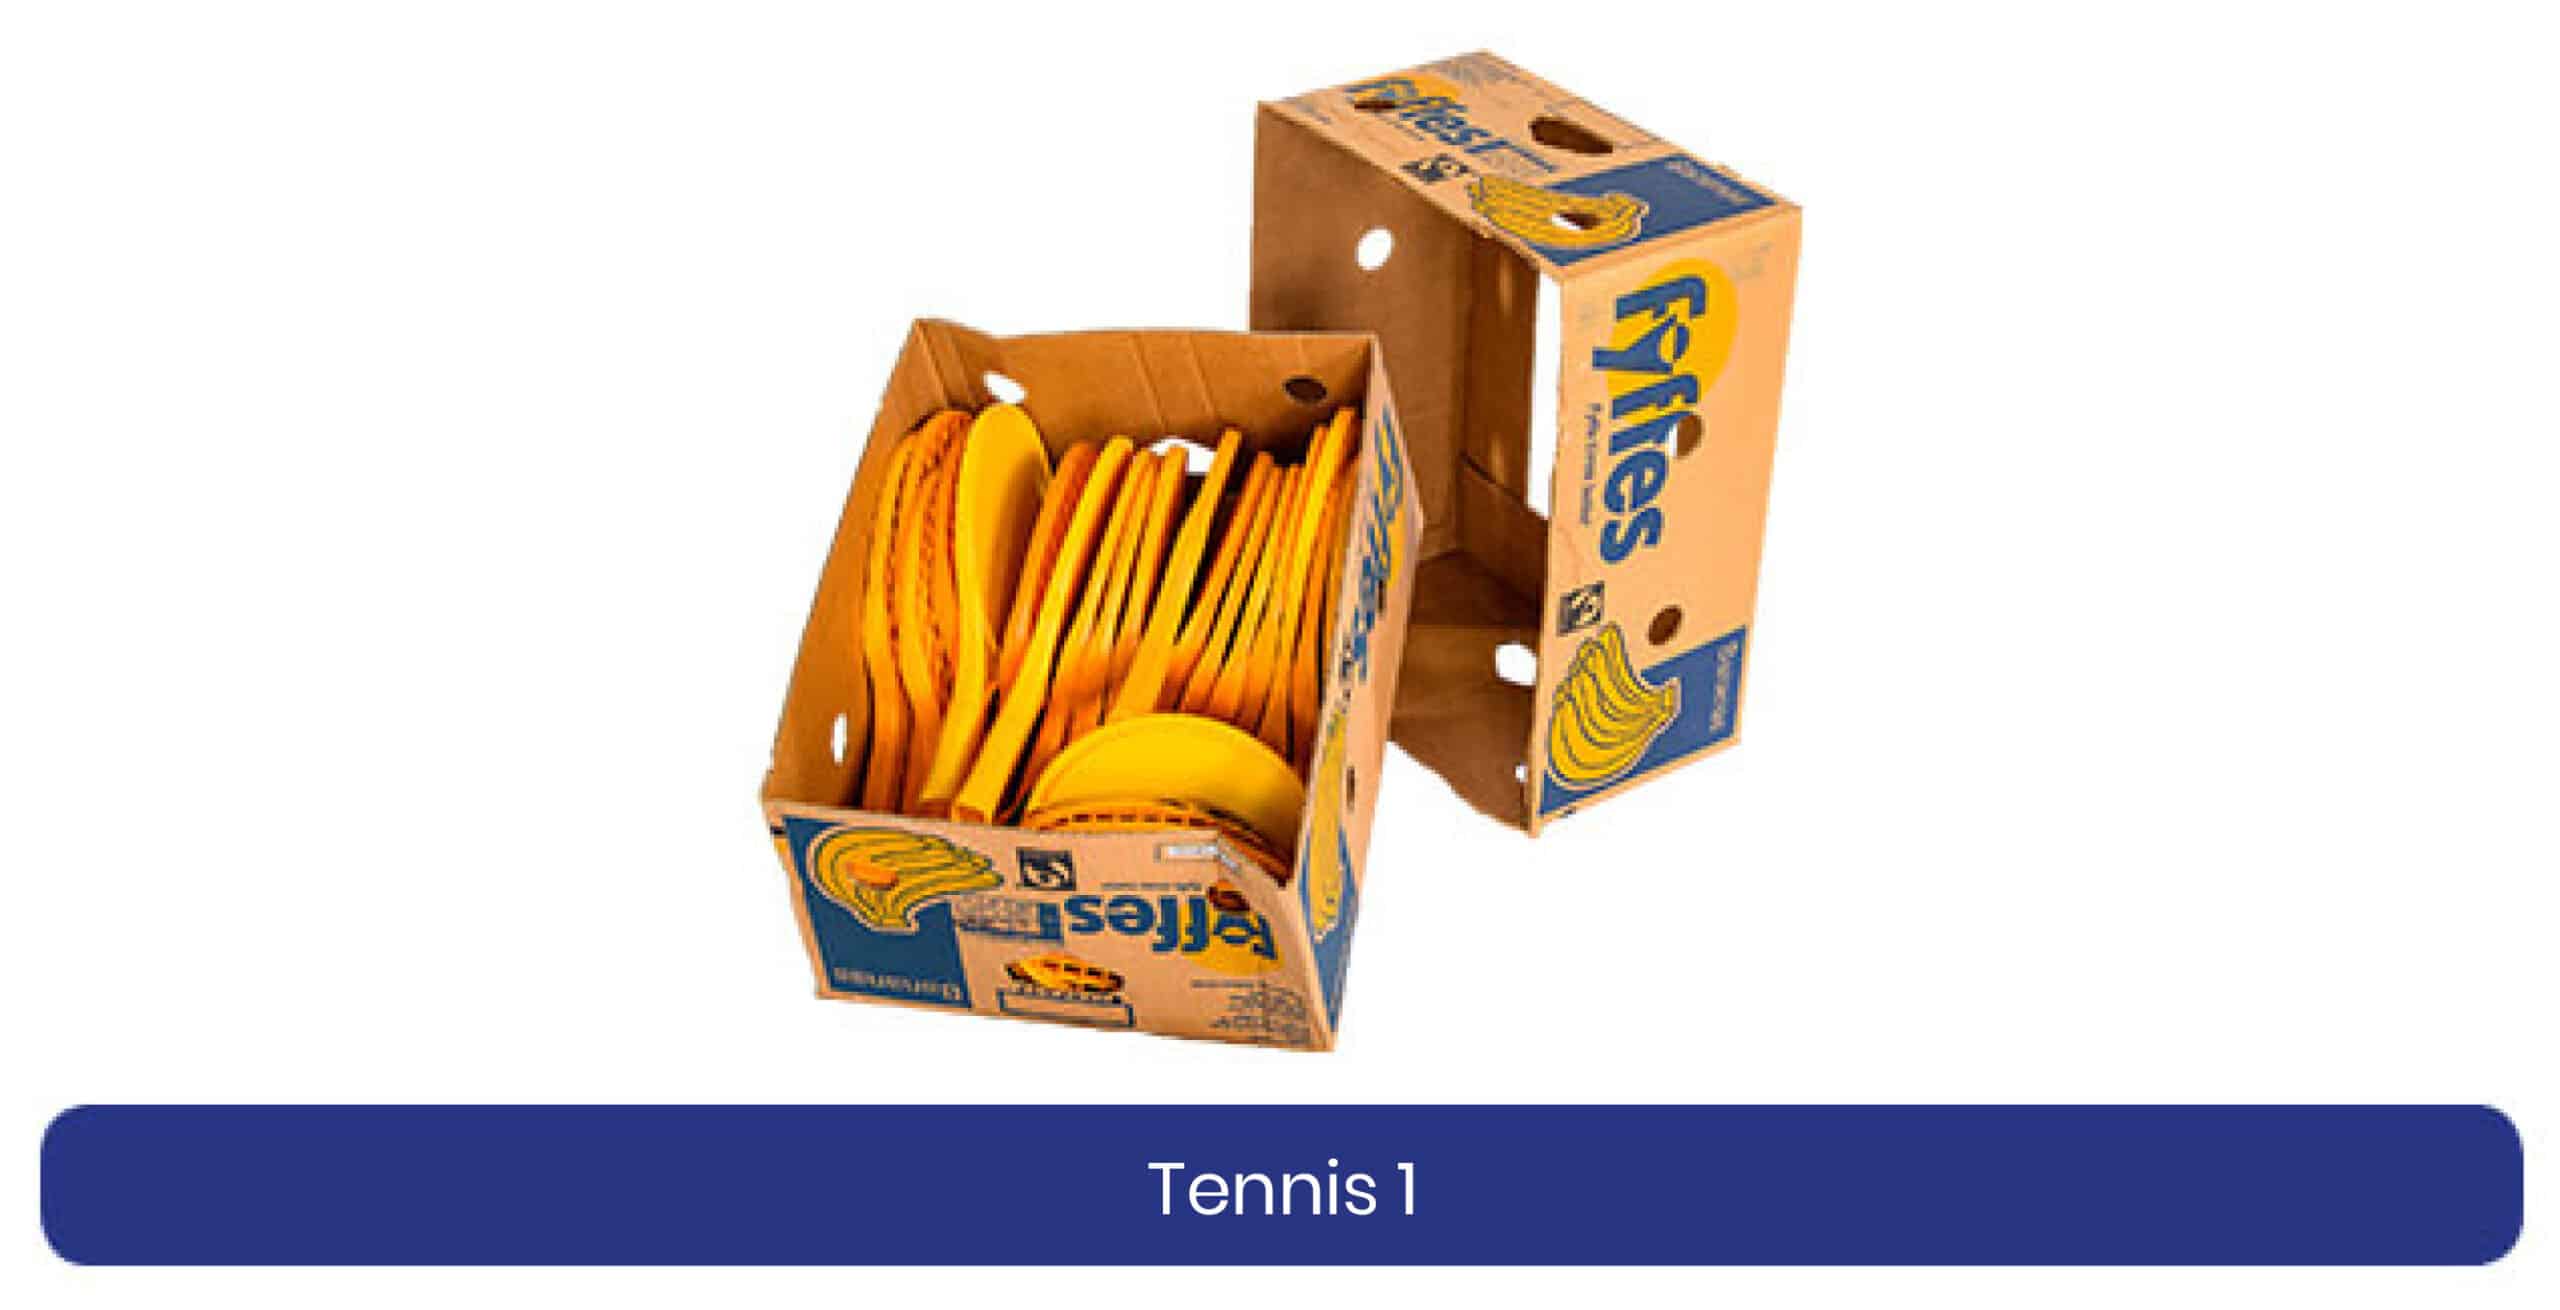 Tennis 1 lenen product